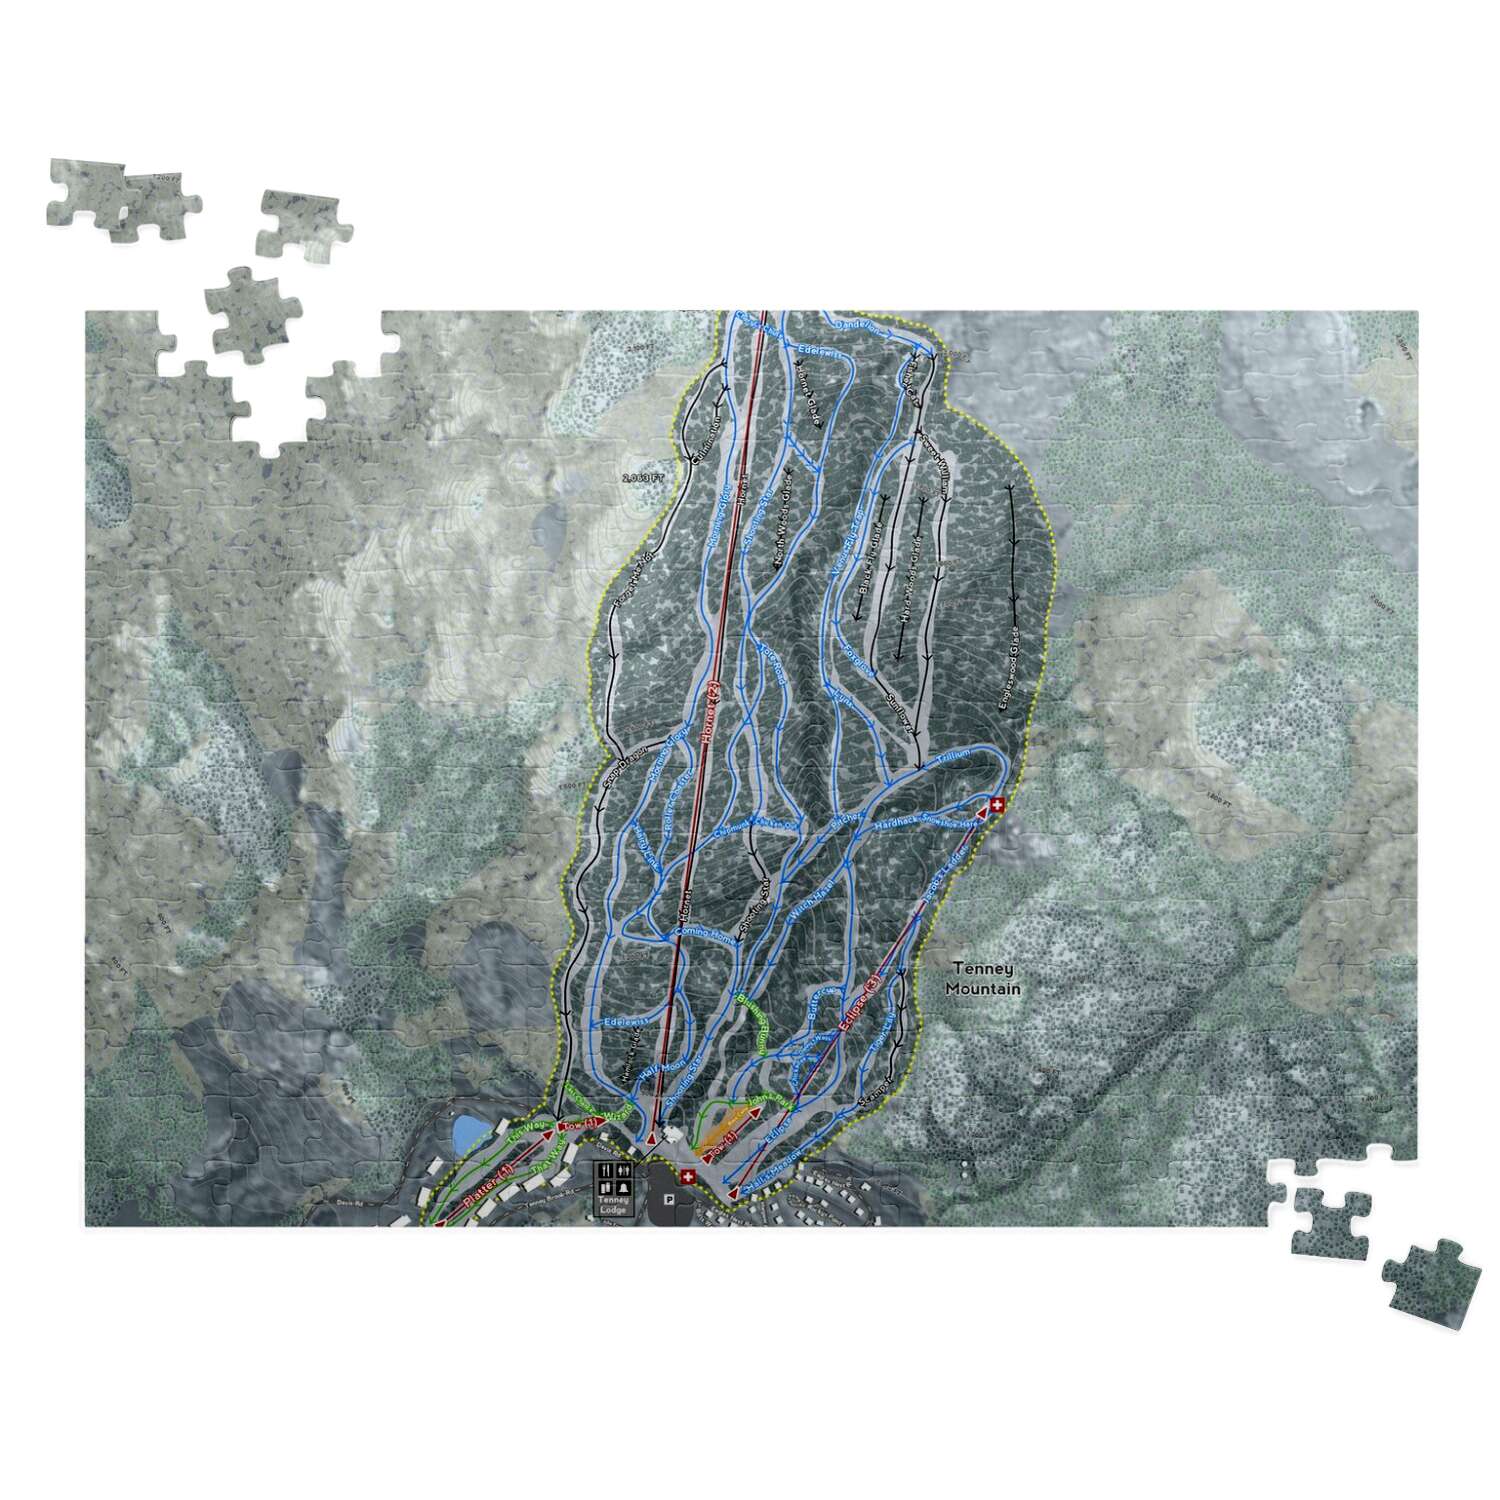 Tenney Mountain New Hampshire Ski Trail Map Puzzles - Powderaddicts